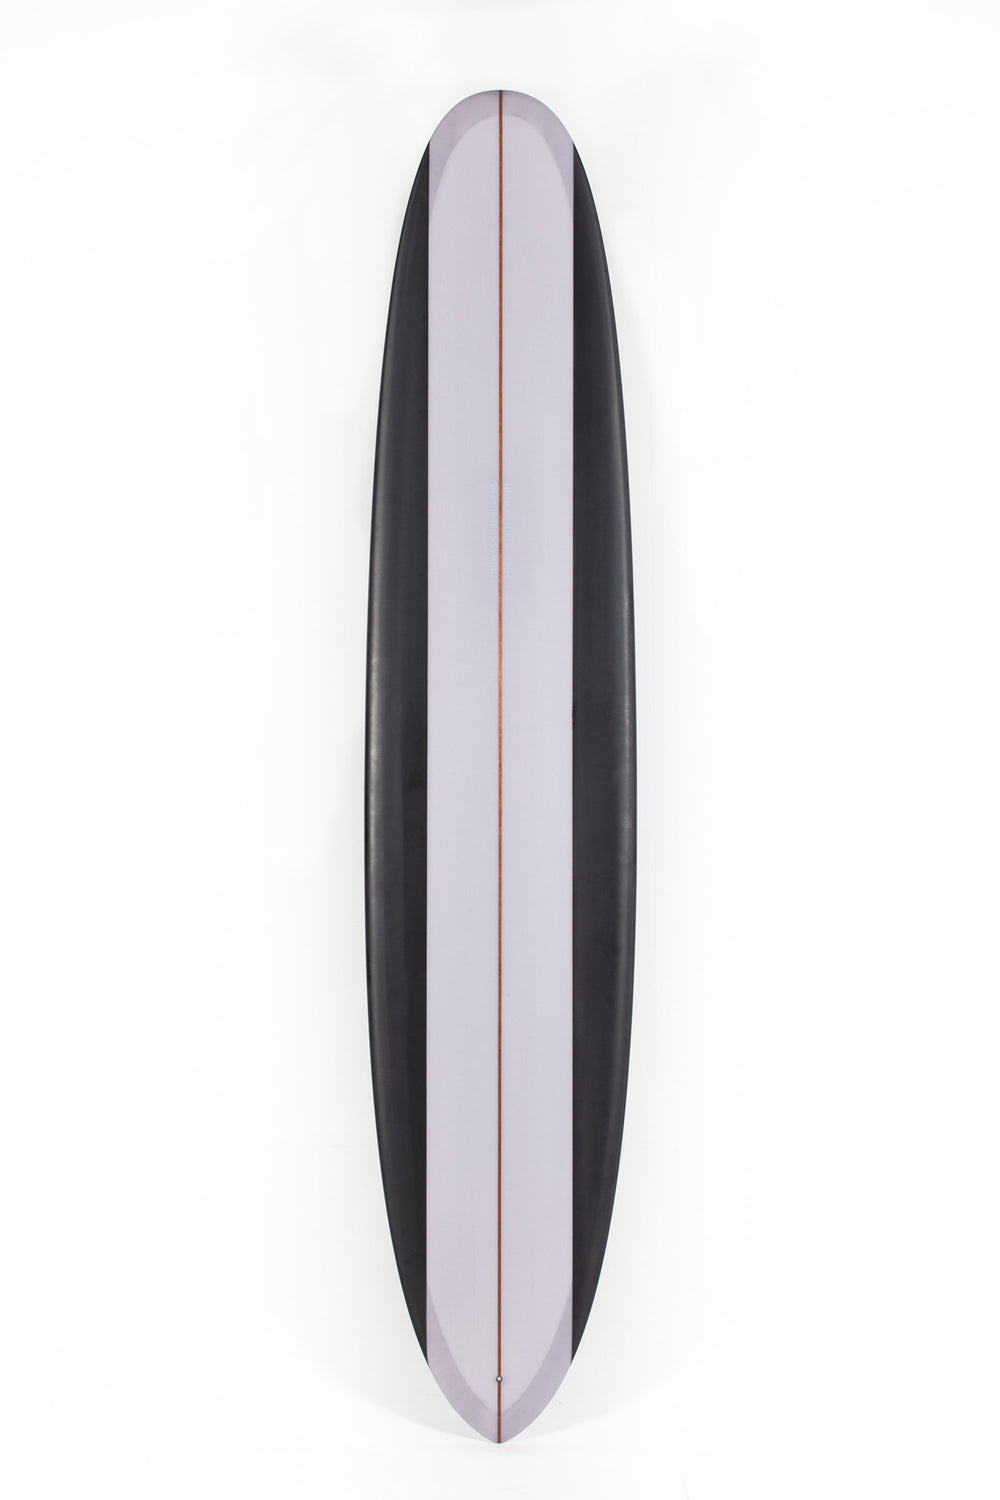 Pukas Surf Shop - Thomas Surfboards - THE BILL PIN - 9'4